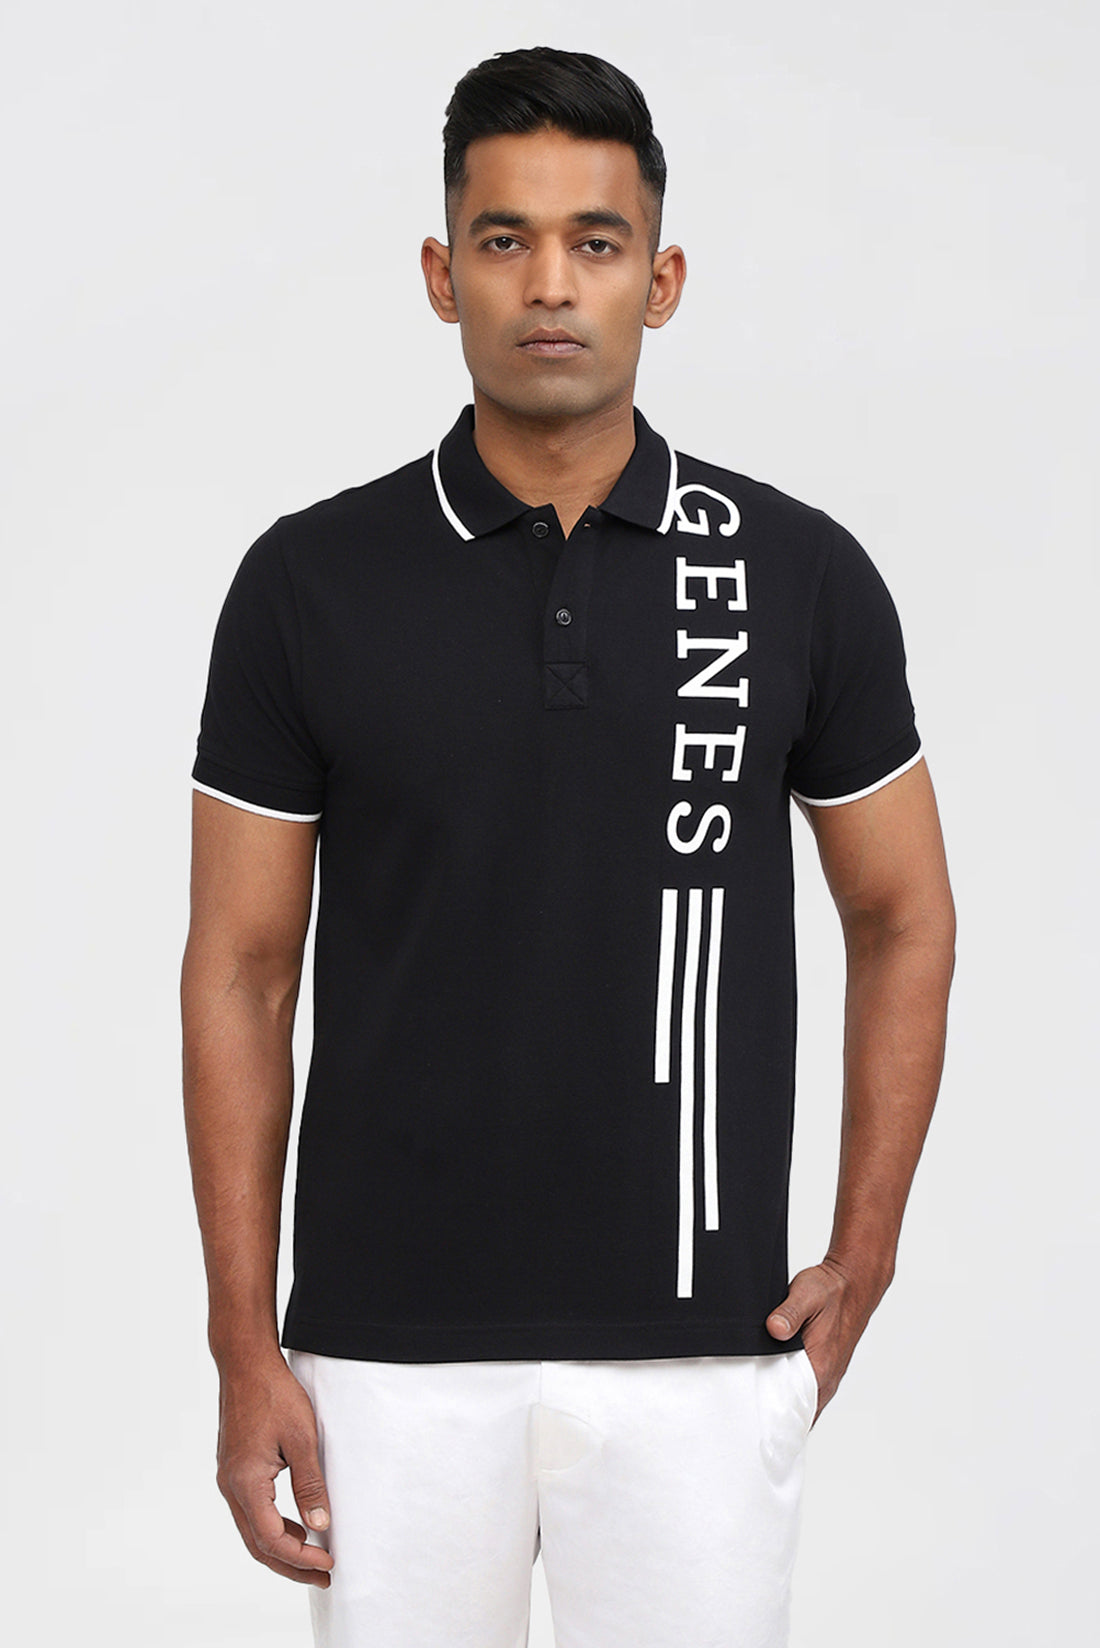 Men's Polo T-Shirt with Genes Monogram